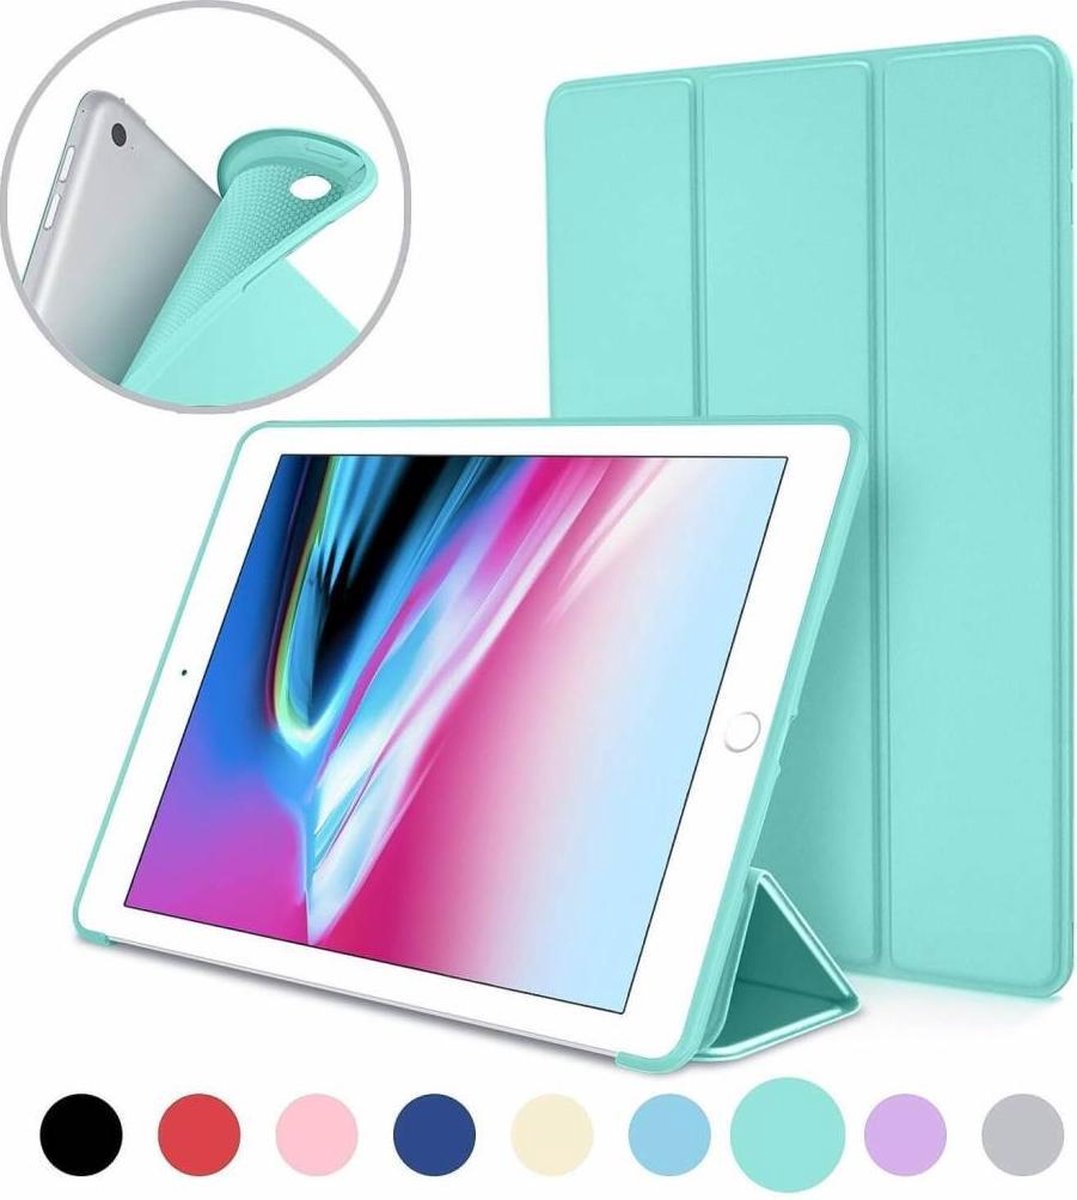 iPadspullekes.nl - iPad 2019 10.2 Smart Cover Case Licht Blauw